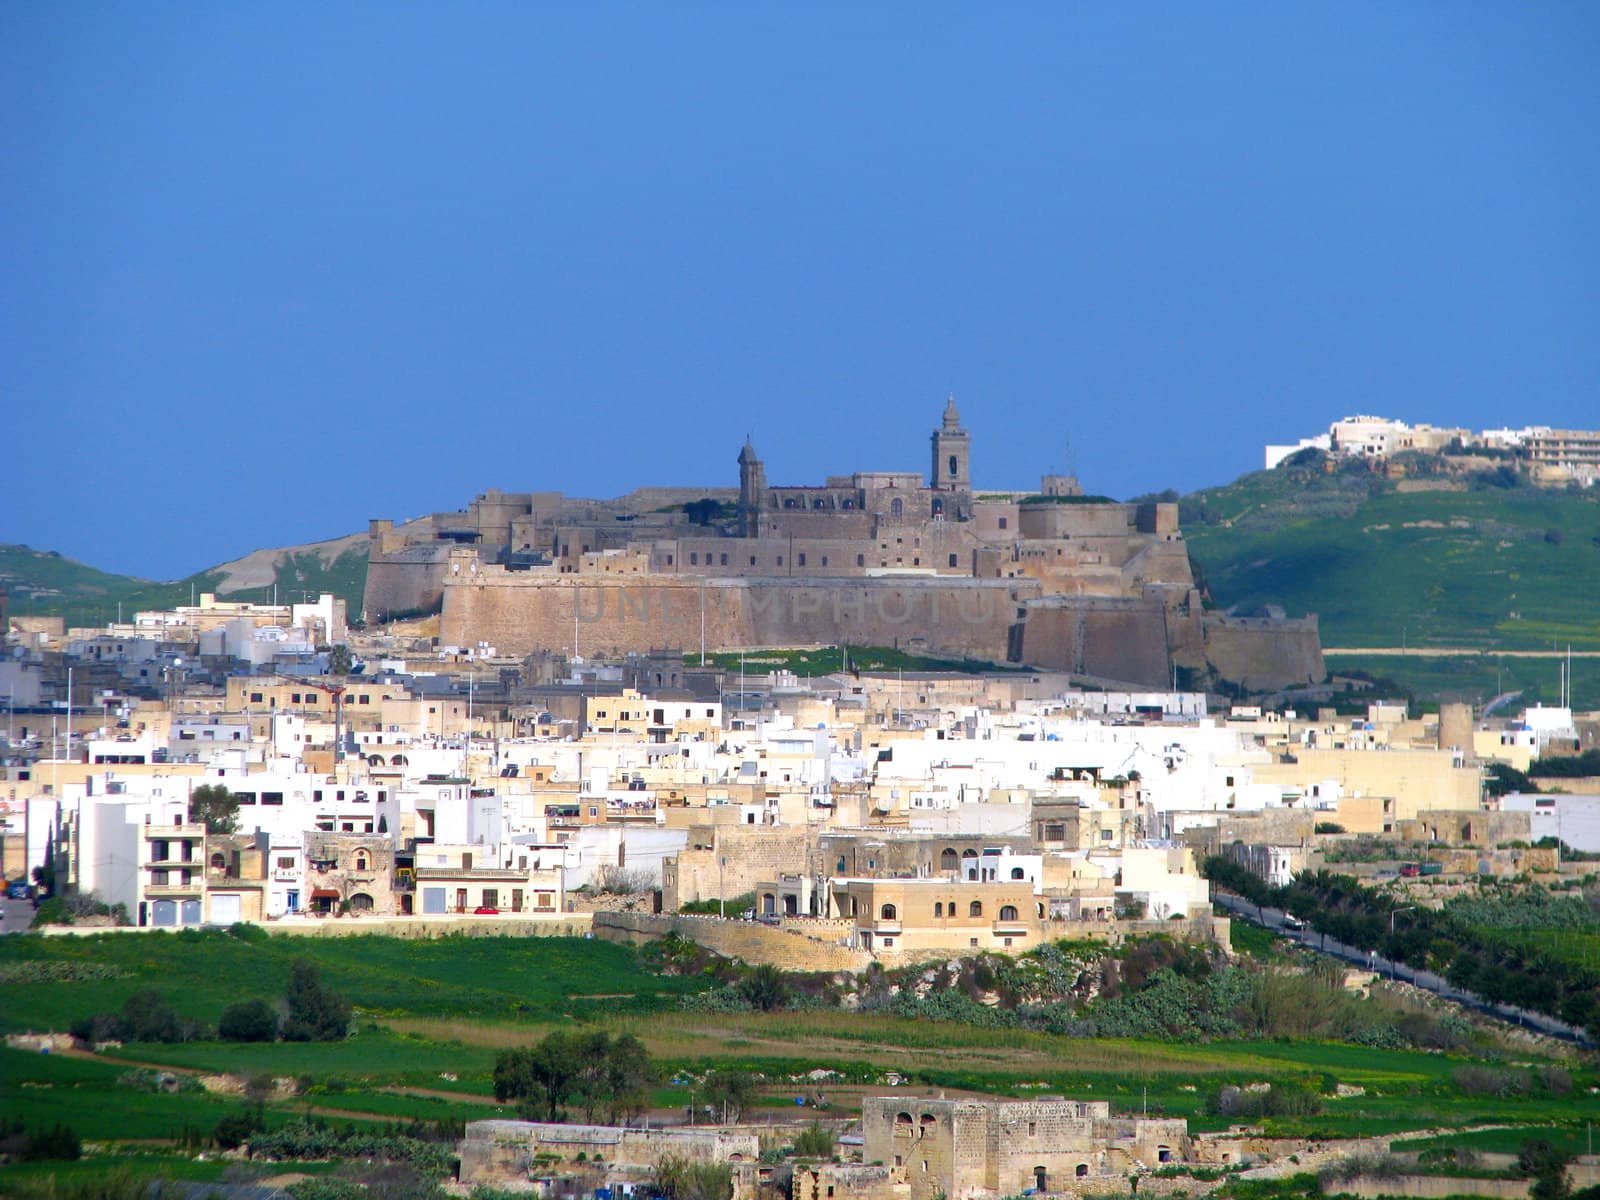 The fortified citadel of Rabat in Gozo - Malta.